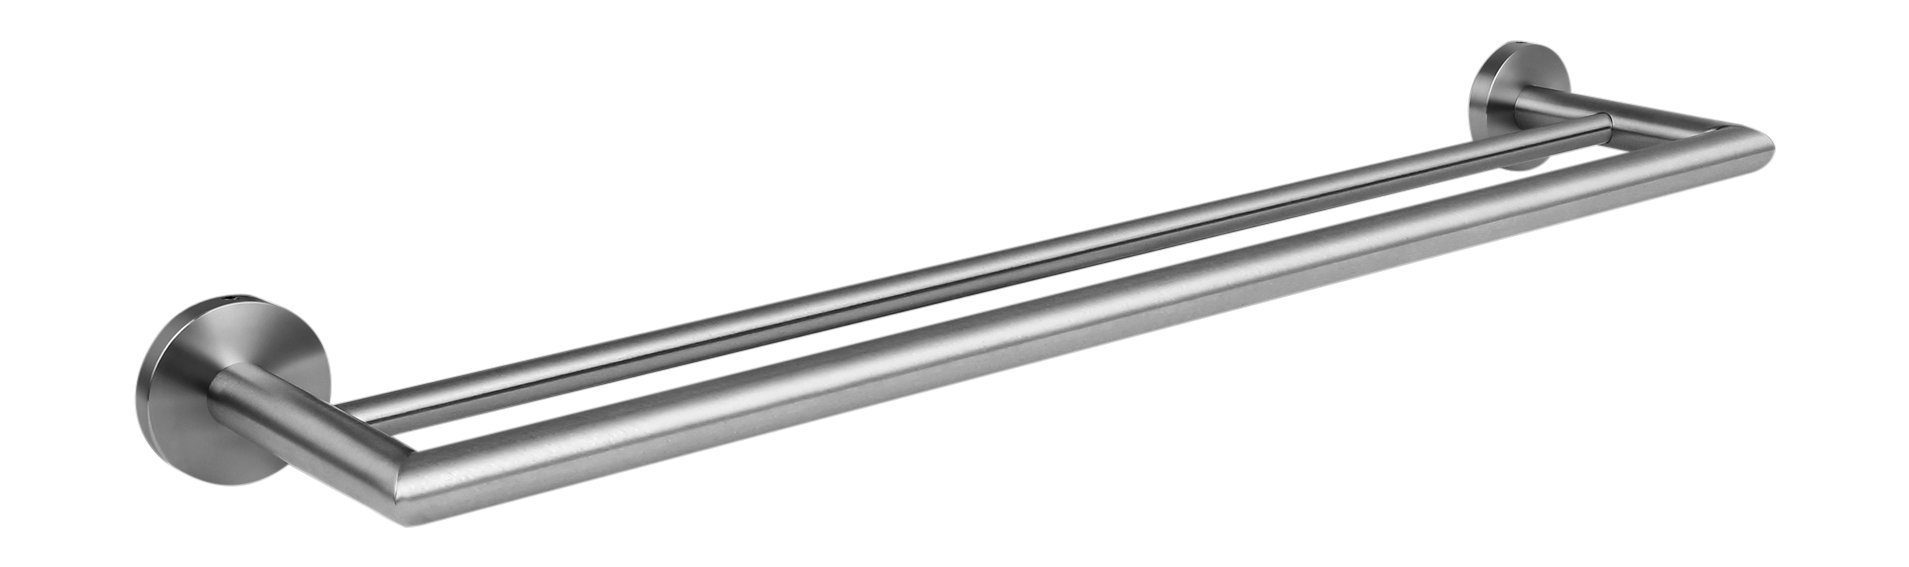 59cm Doppel-Badetuchstange Aluminium Handtuchstange Handtuchhalter Wandmontage 